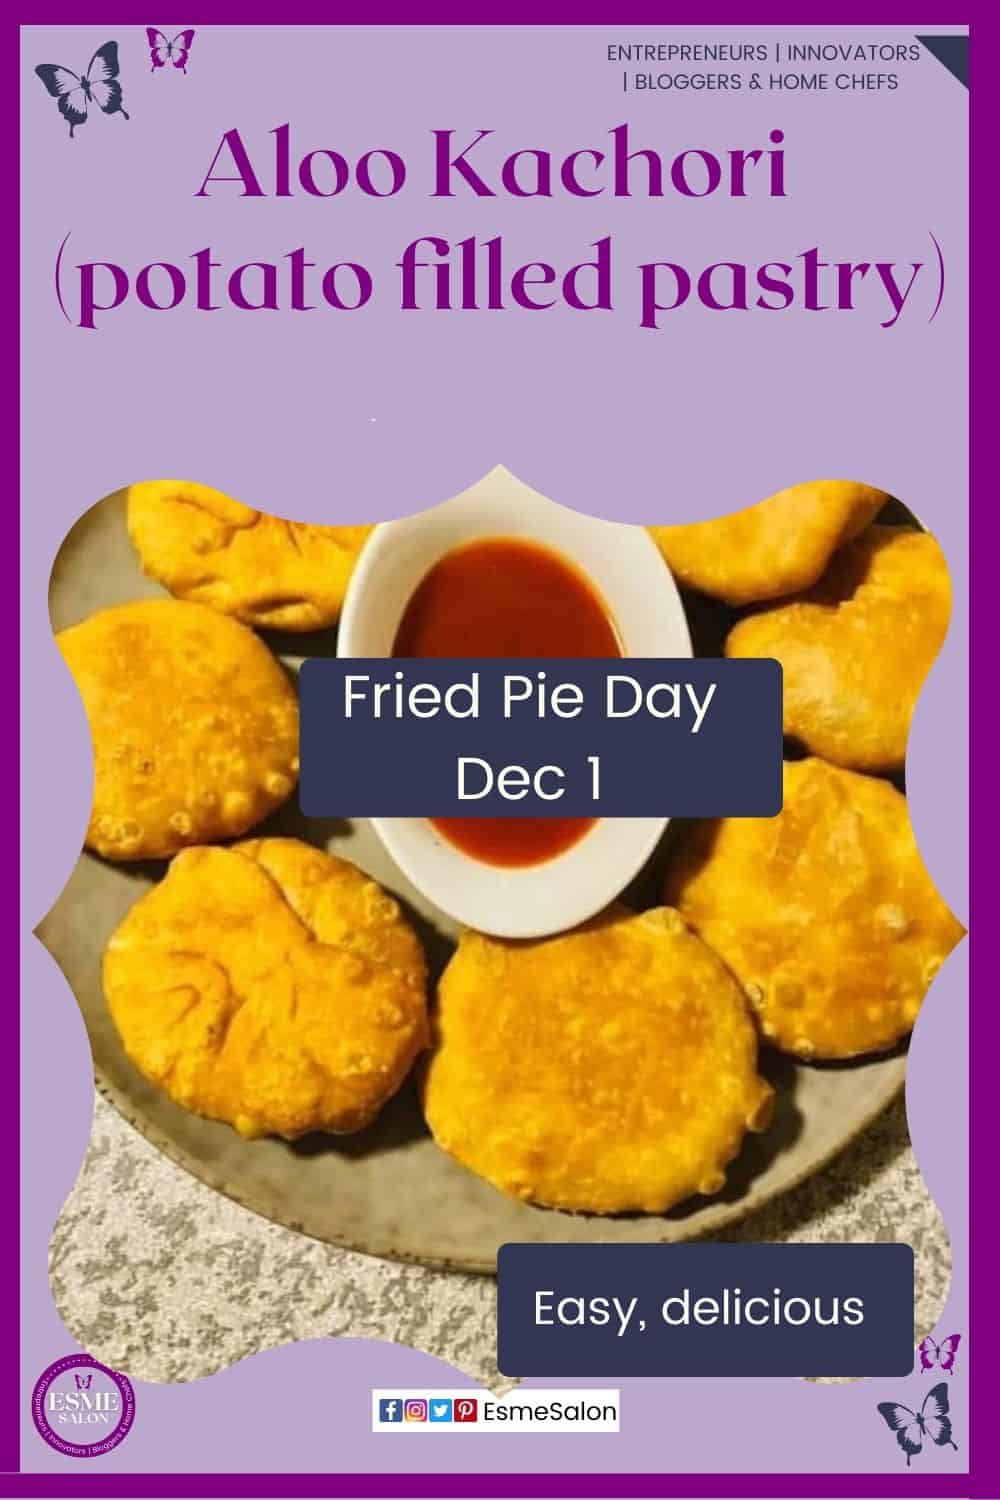 an image of Potato filled pastry, Aloo Kachori